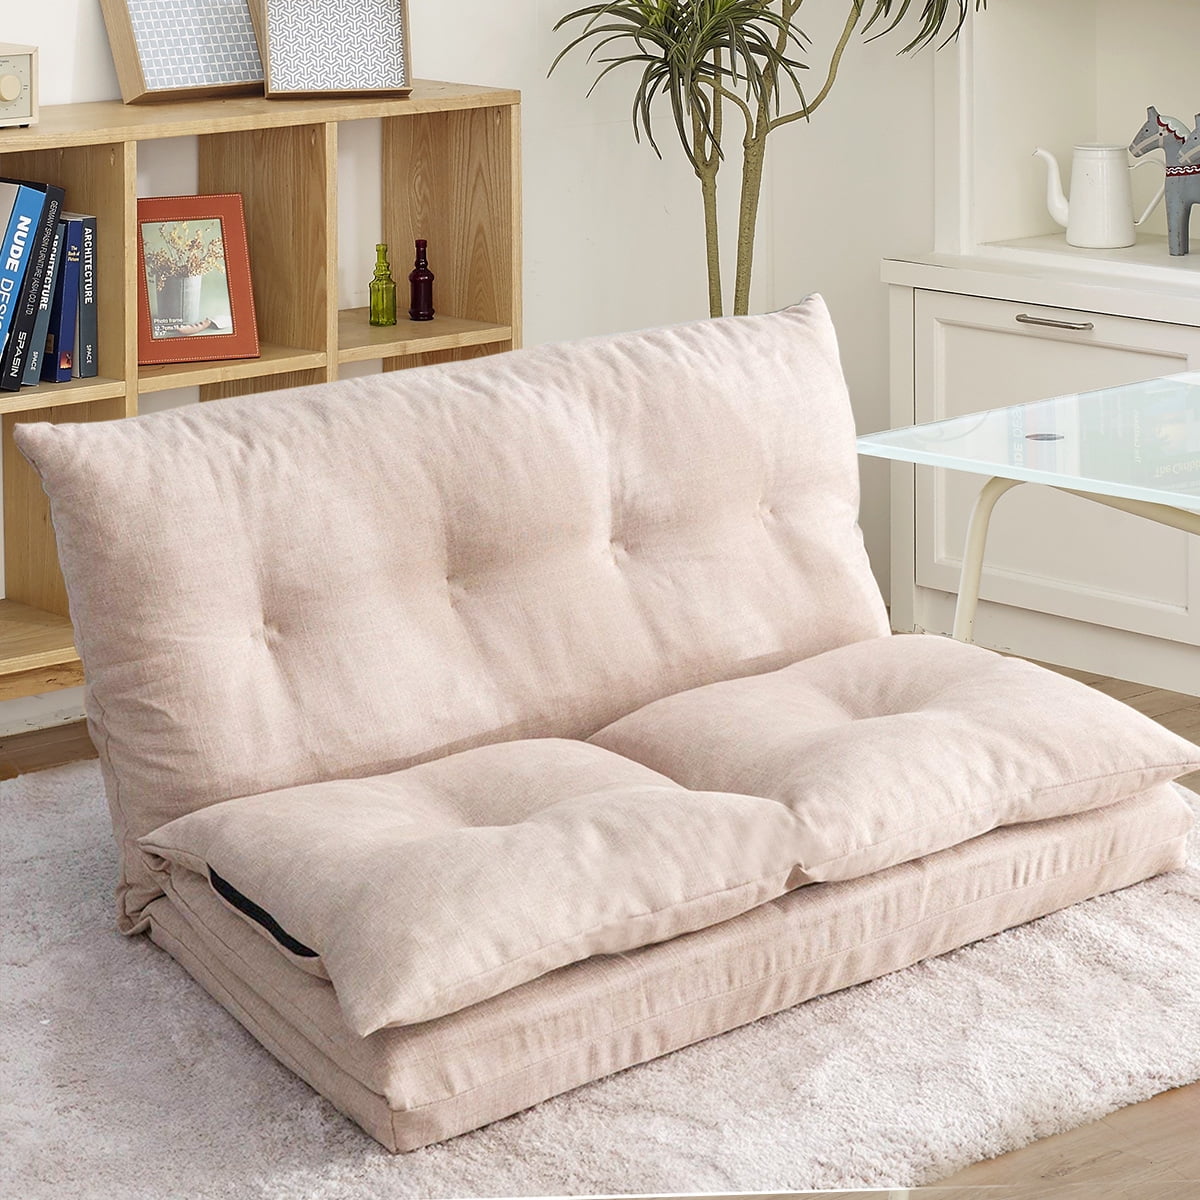 Dobravel Butacas Y Sillones Para Sala Sofa Fauteuil Salon Sillon Reclinable  Folding Bed Cama Plegable Bamboo Chaise Lounge - AliExpress